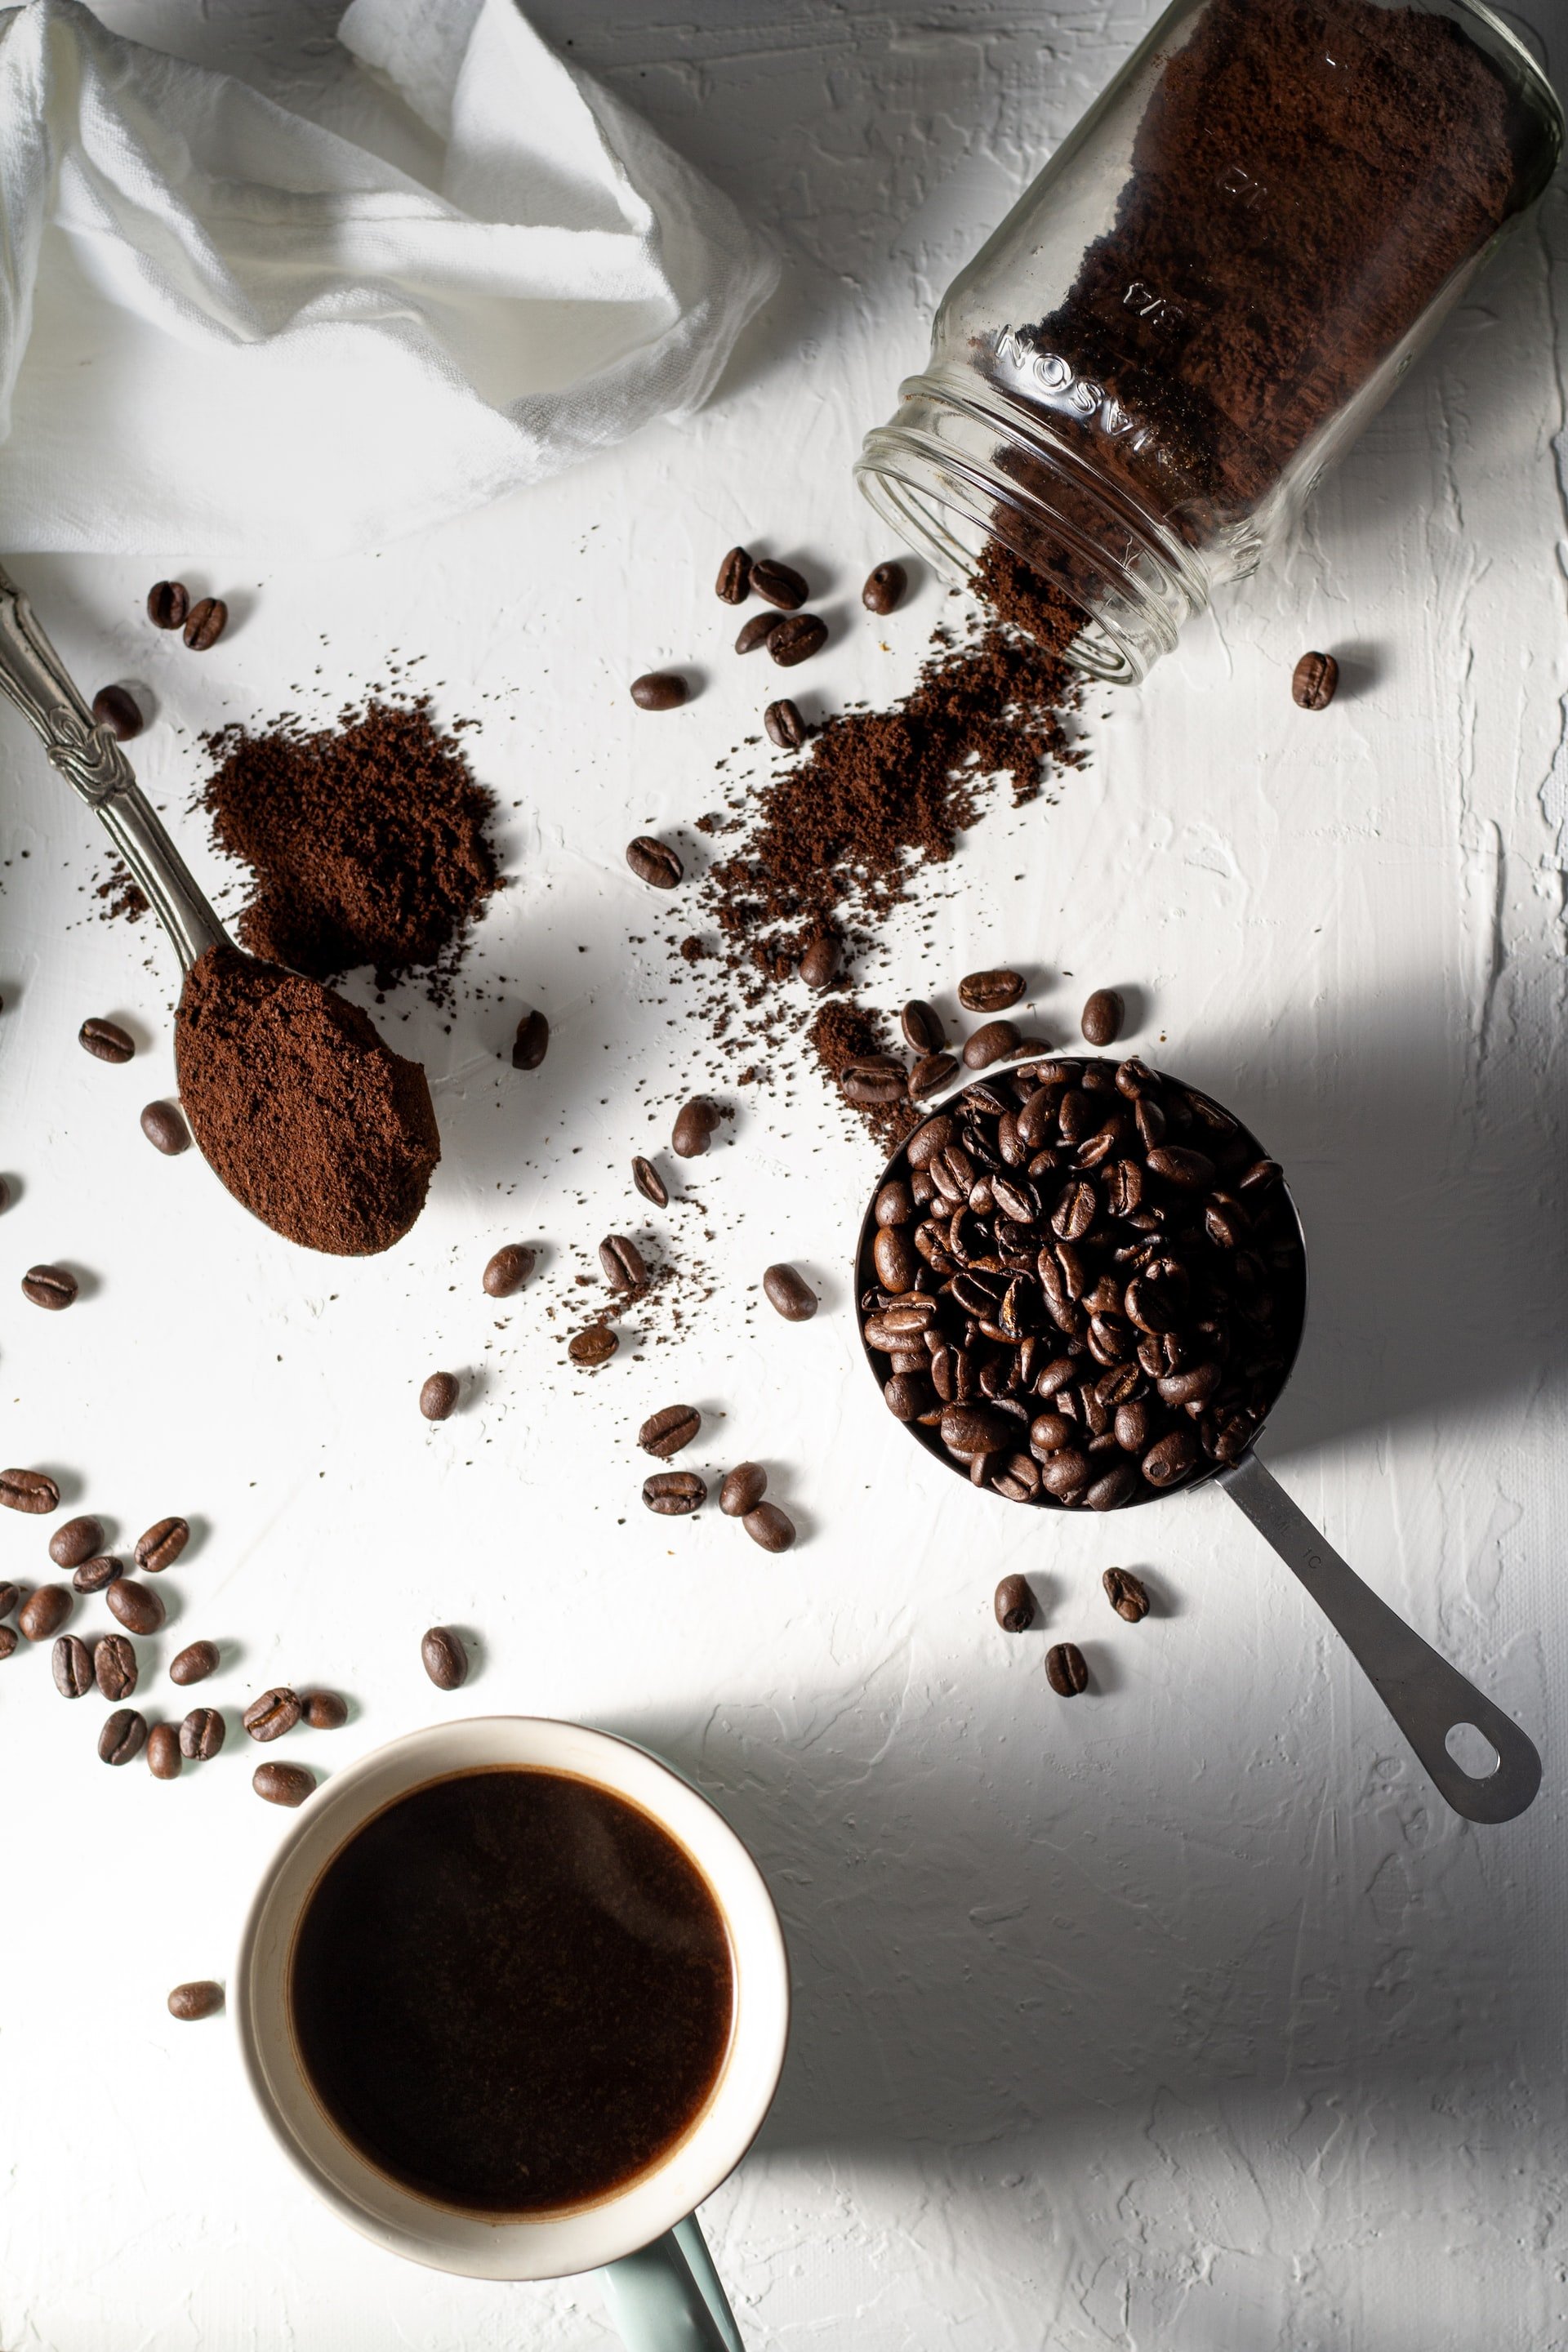 Hem de barrejar cafeïna i creatina?